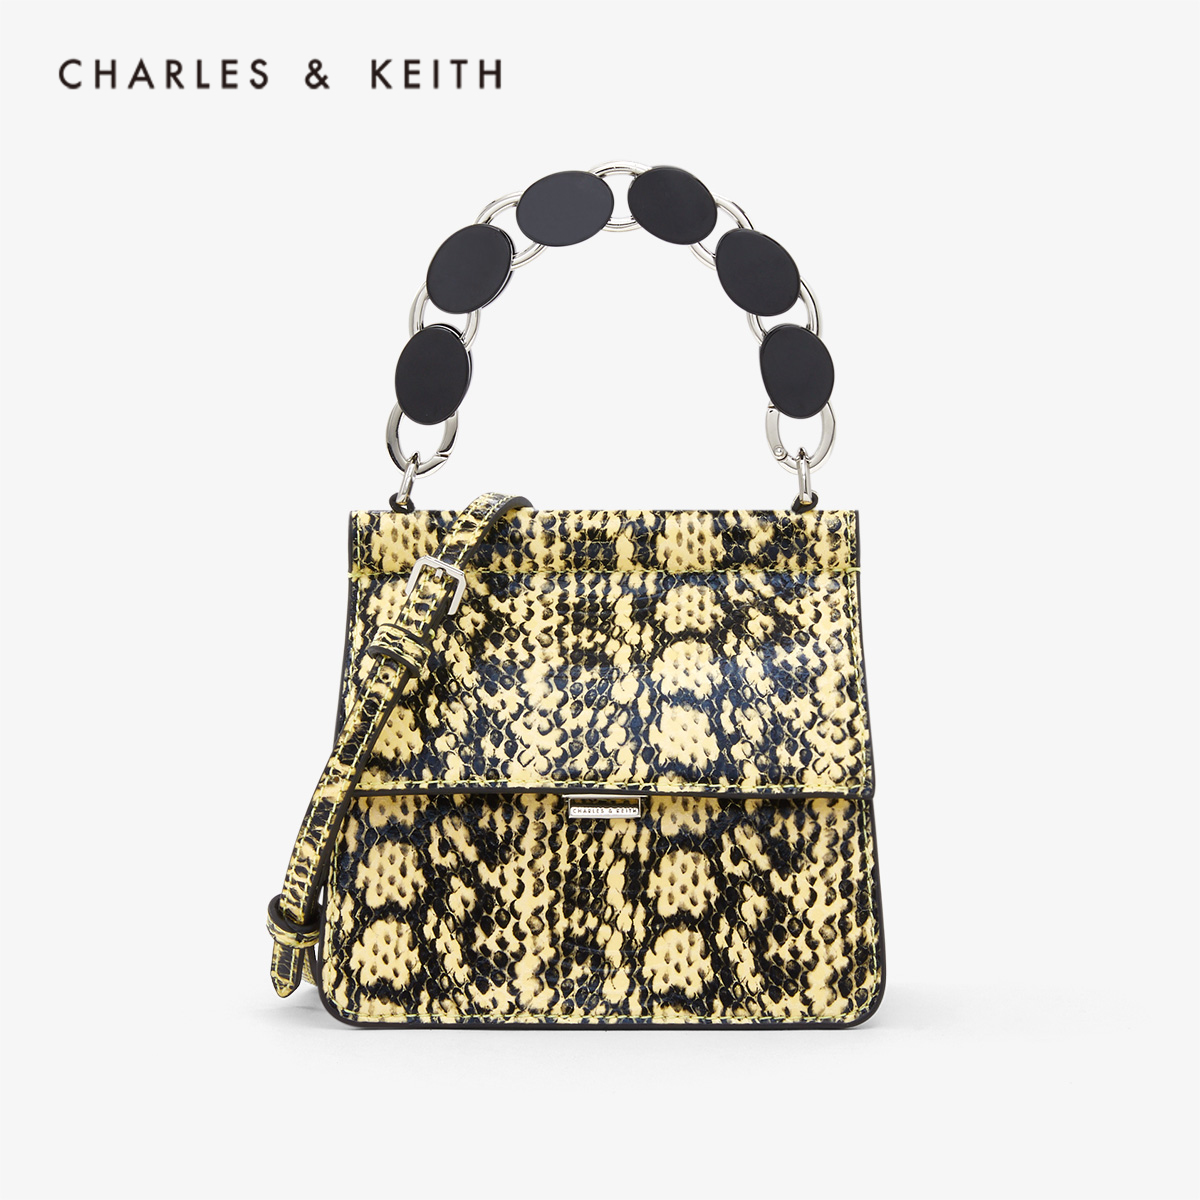 CHARLES & KEITH women's bag CK2-50781018 Ladies vintage square bag flap tote shoulder bag